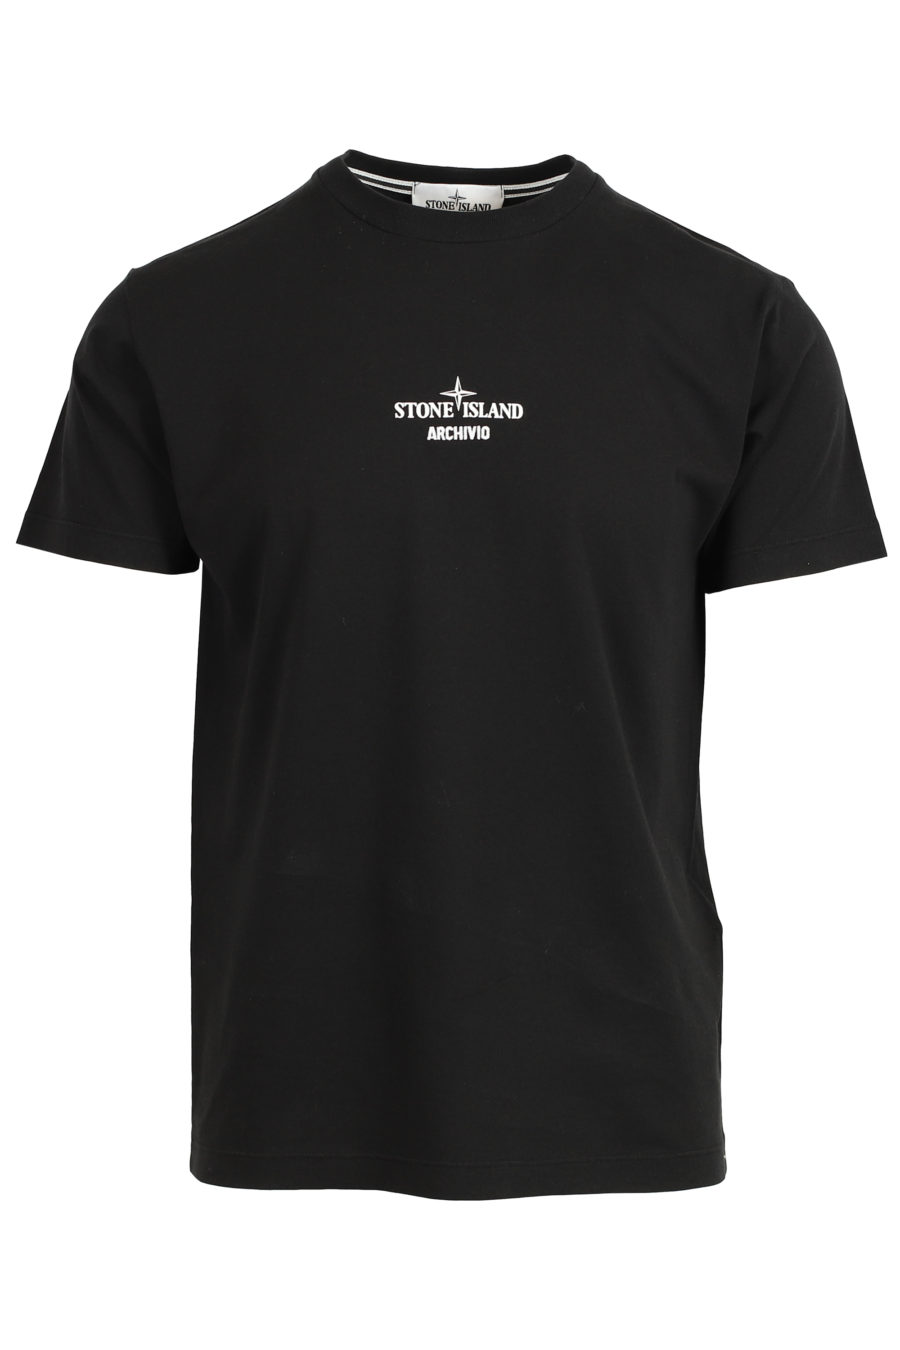 Camiseta negra logo "Archivio" - IMG 3586